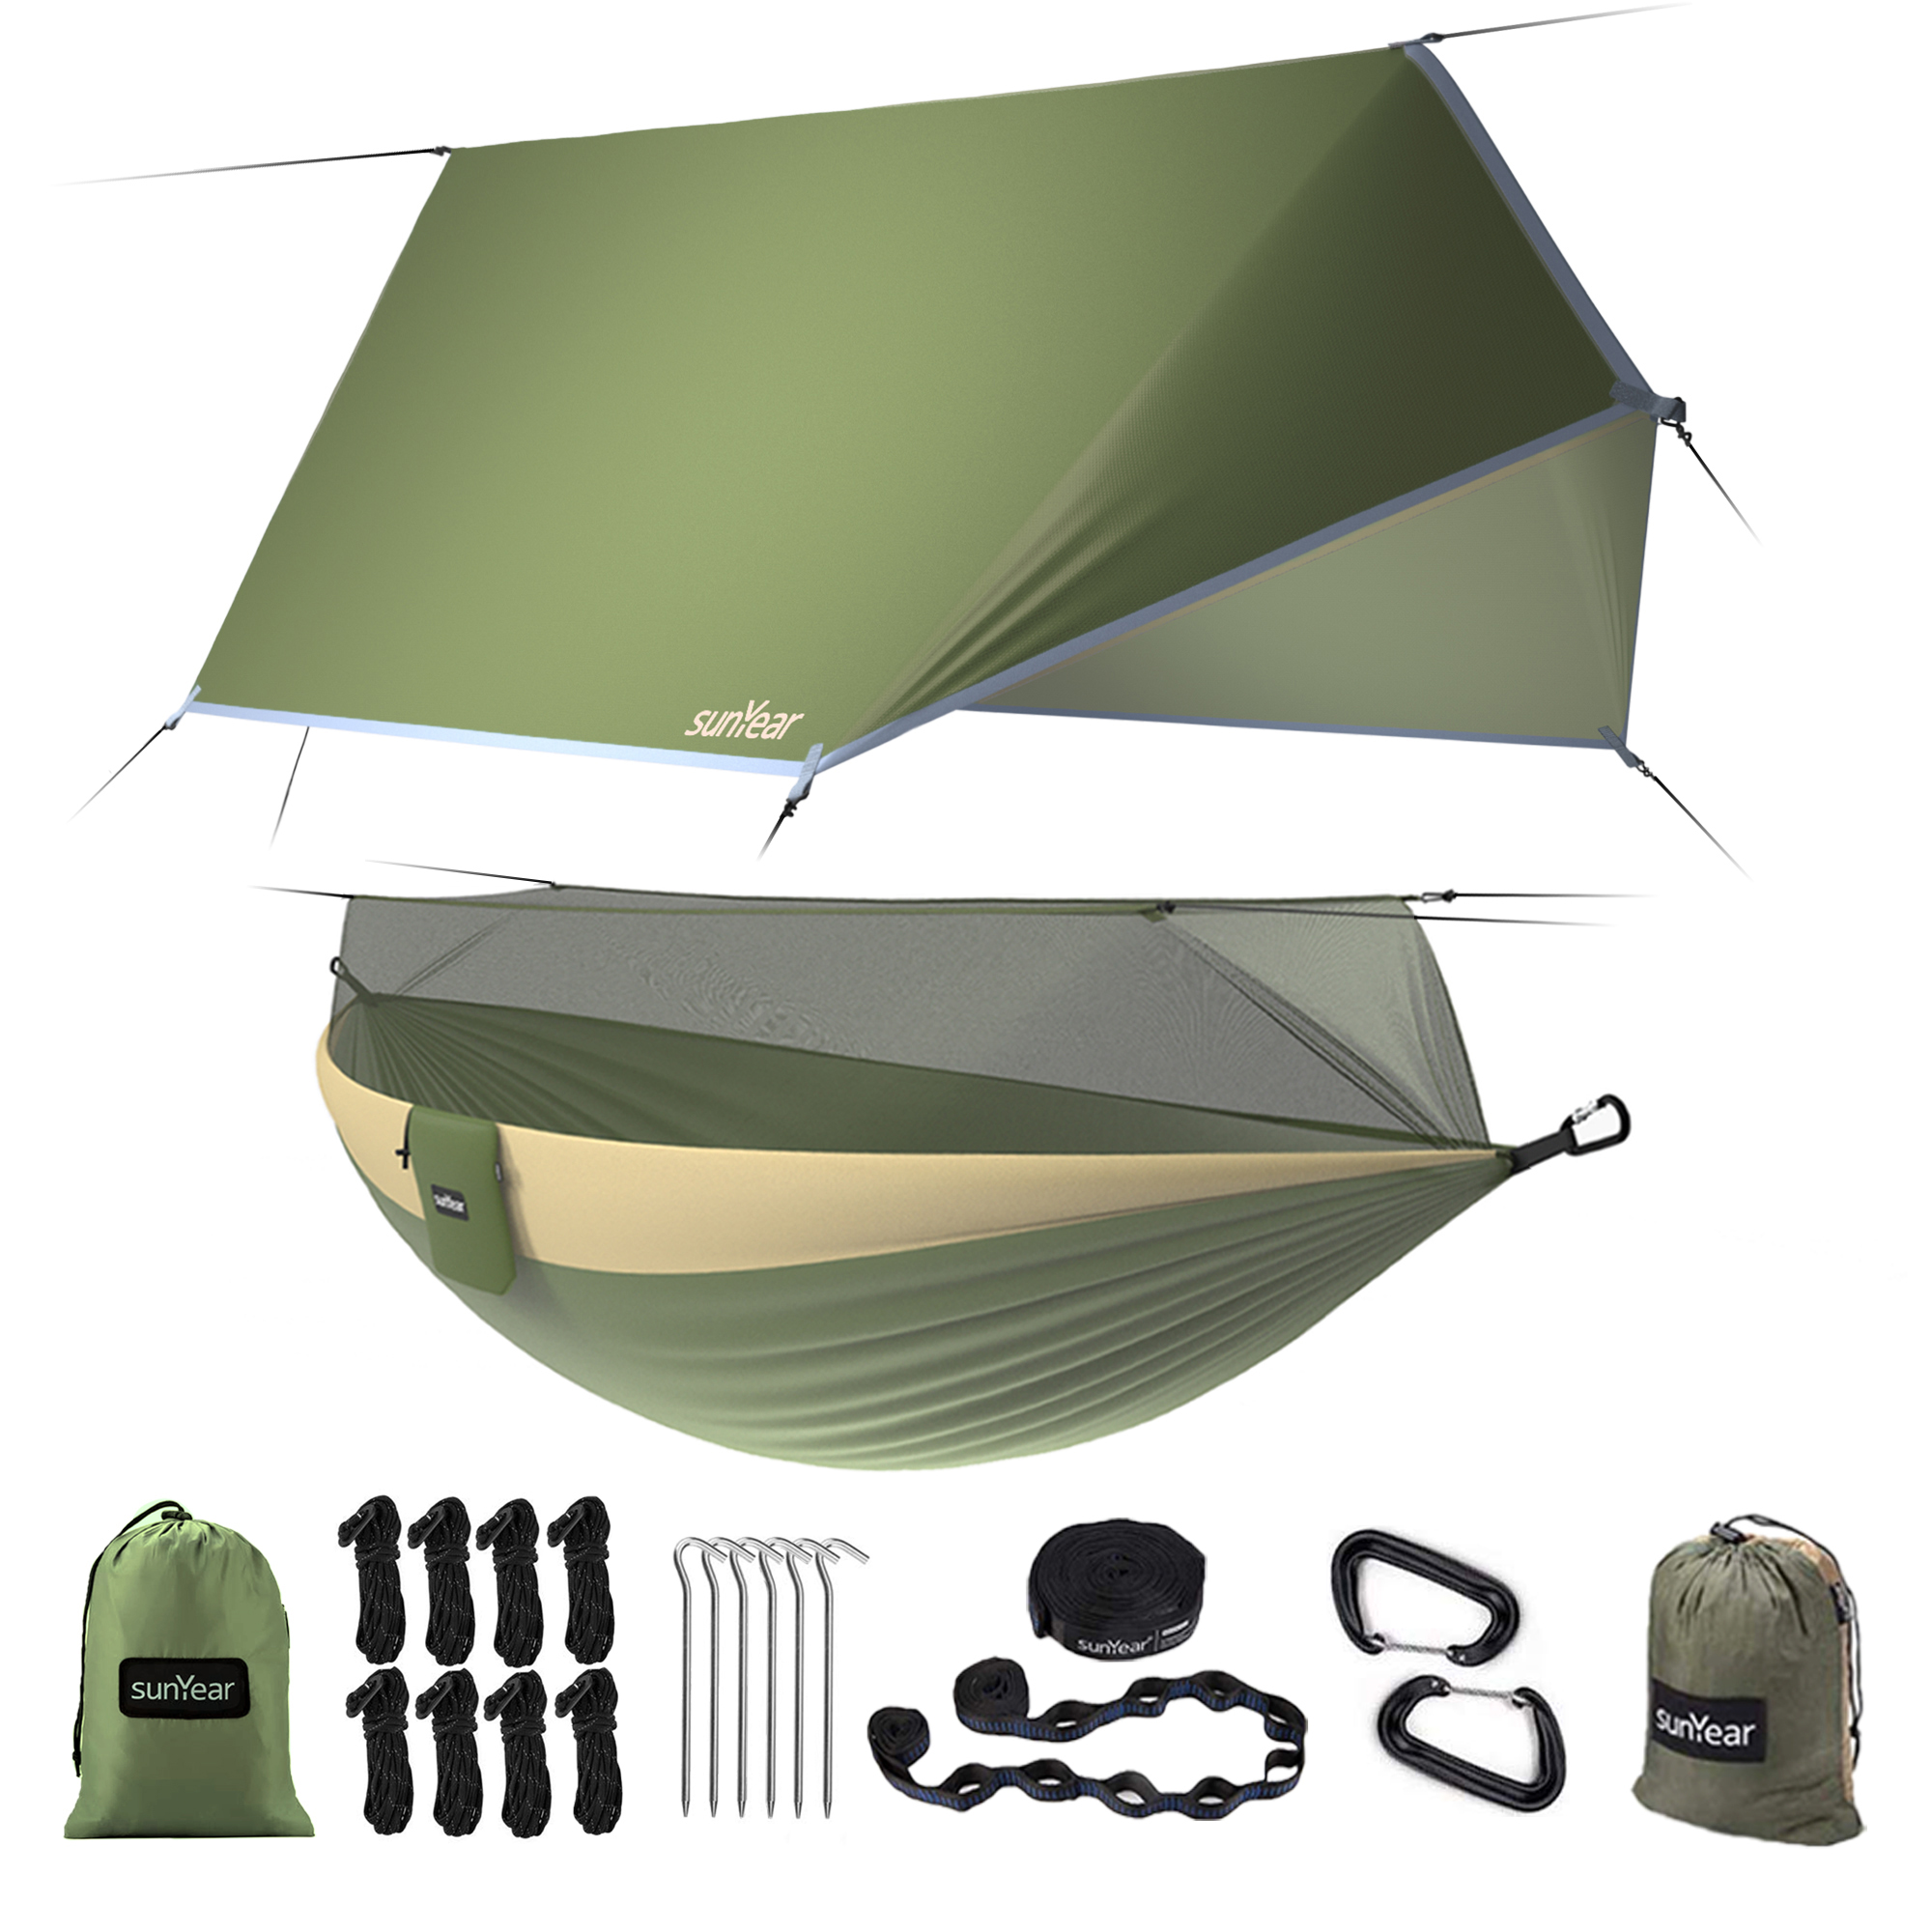 Sunyear Hammock Camping with Rain Fly Tarp and Net, Portable Camping  Hammock Double Tree Hammock Outdoor Indoor Backpacking Travel & Survival, 2  Tree